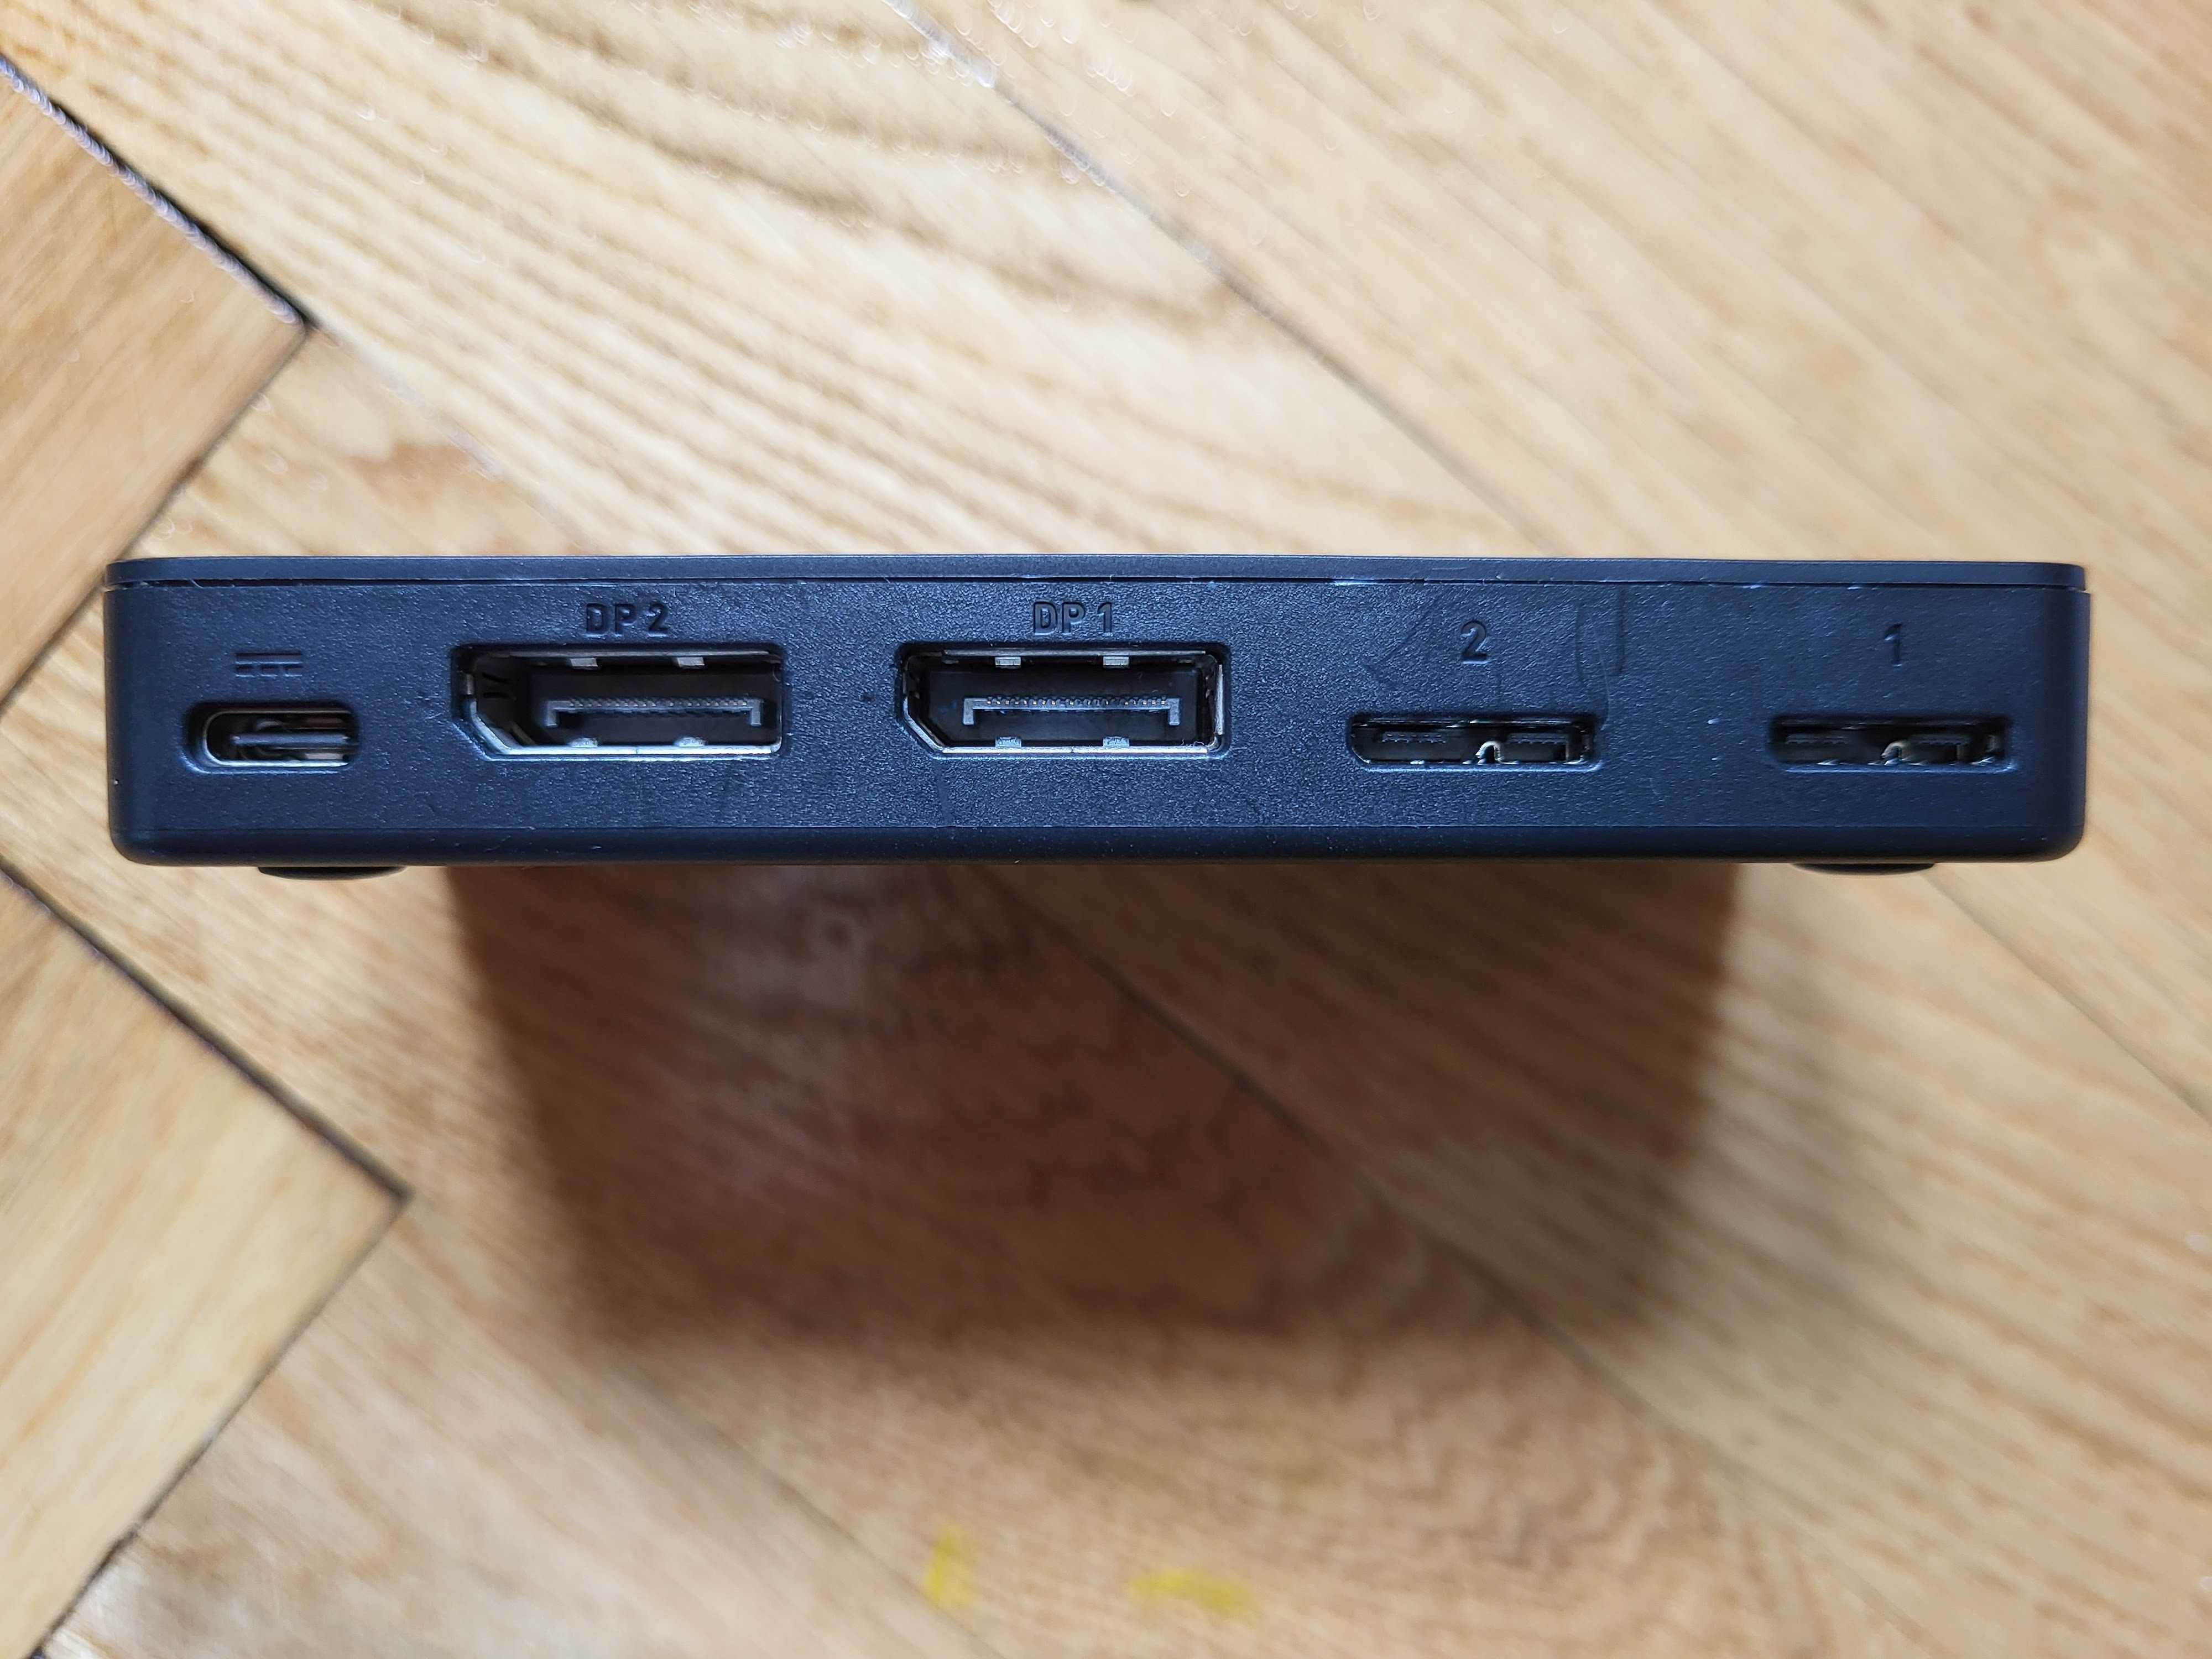 KVM Switch Cable Matters USB 3.0 DisplayPort 1.4 (8K - 60Hz)